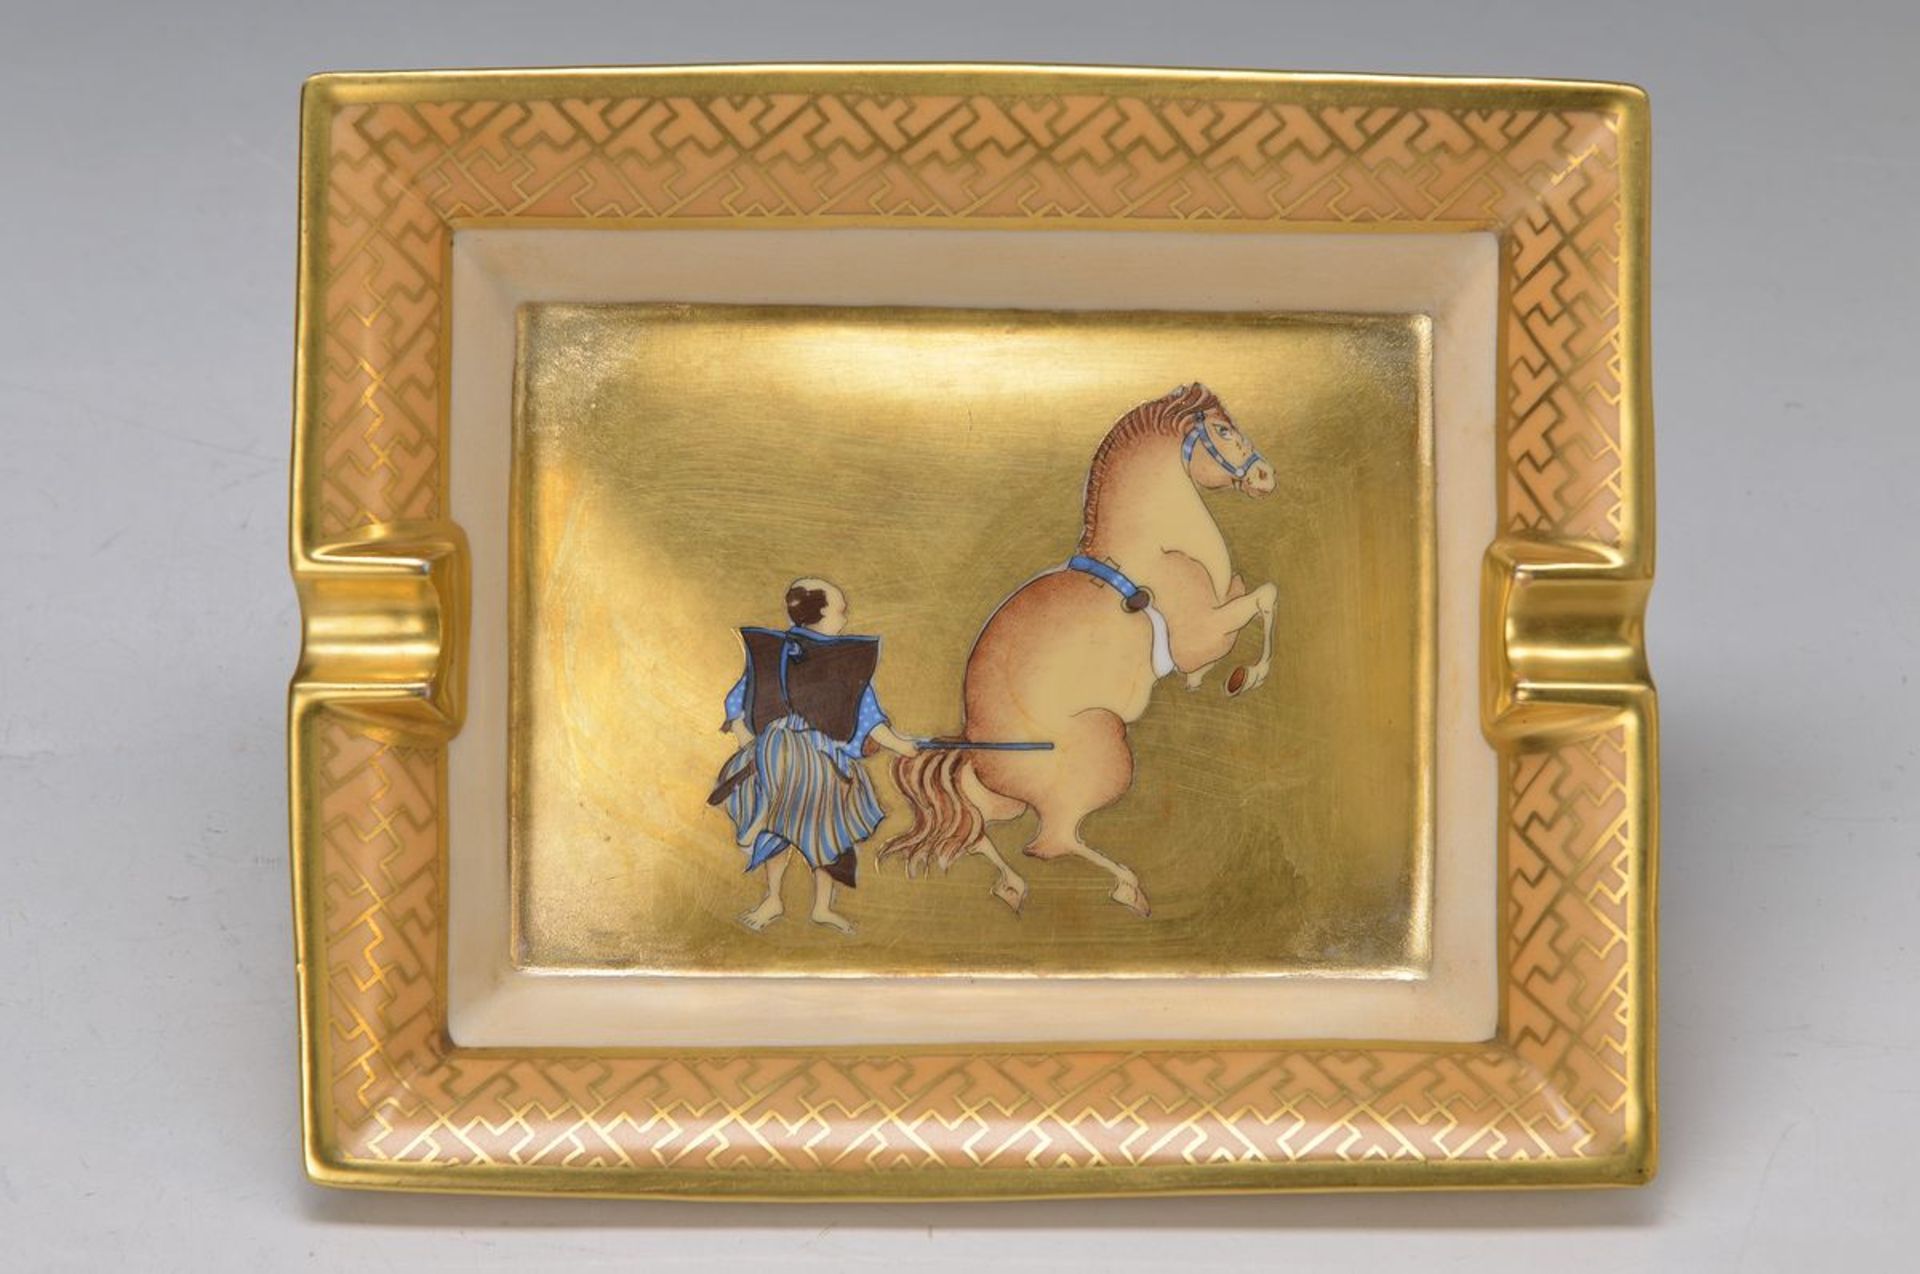 ash-tray, Hèrmes Paris, porcelain, richly gilt, motif of Samurai with horse, approx. 3x19.5x16.